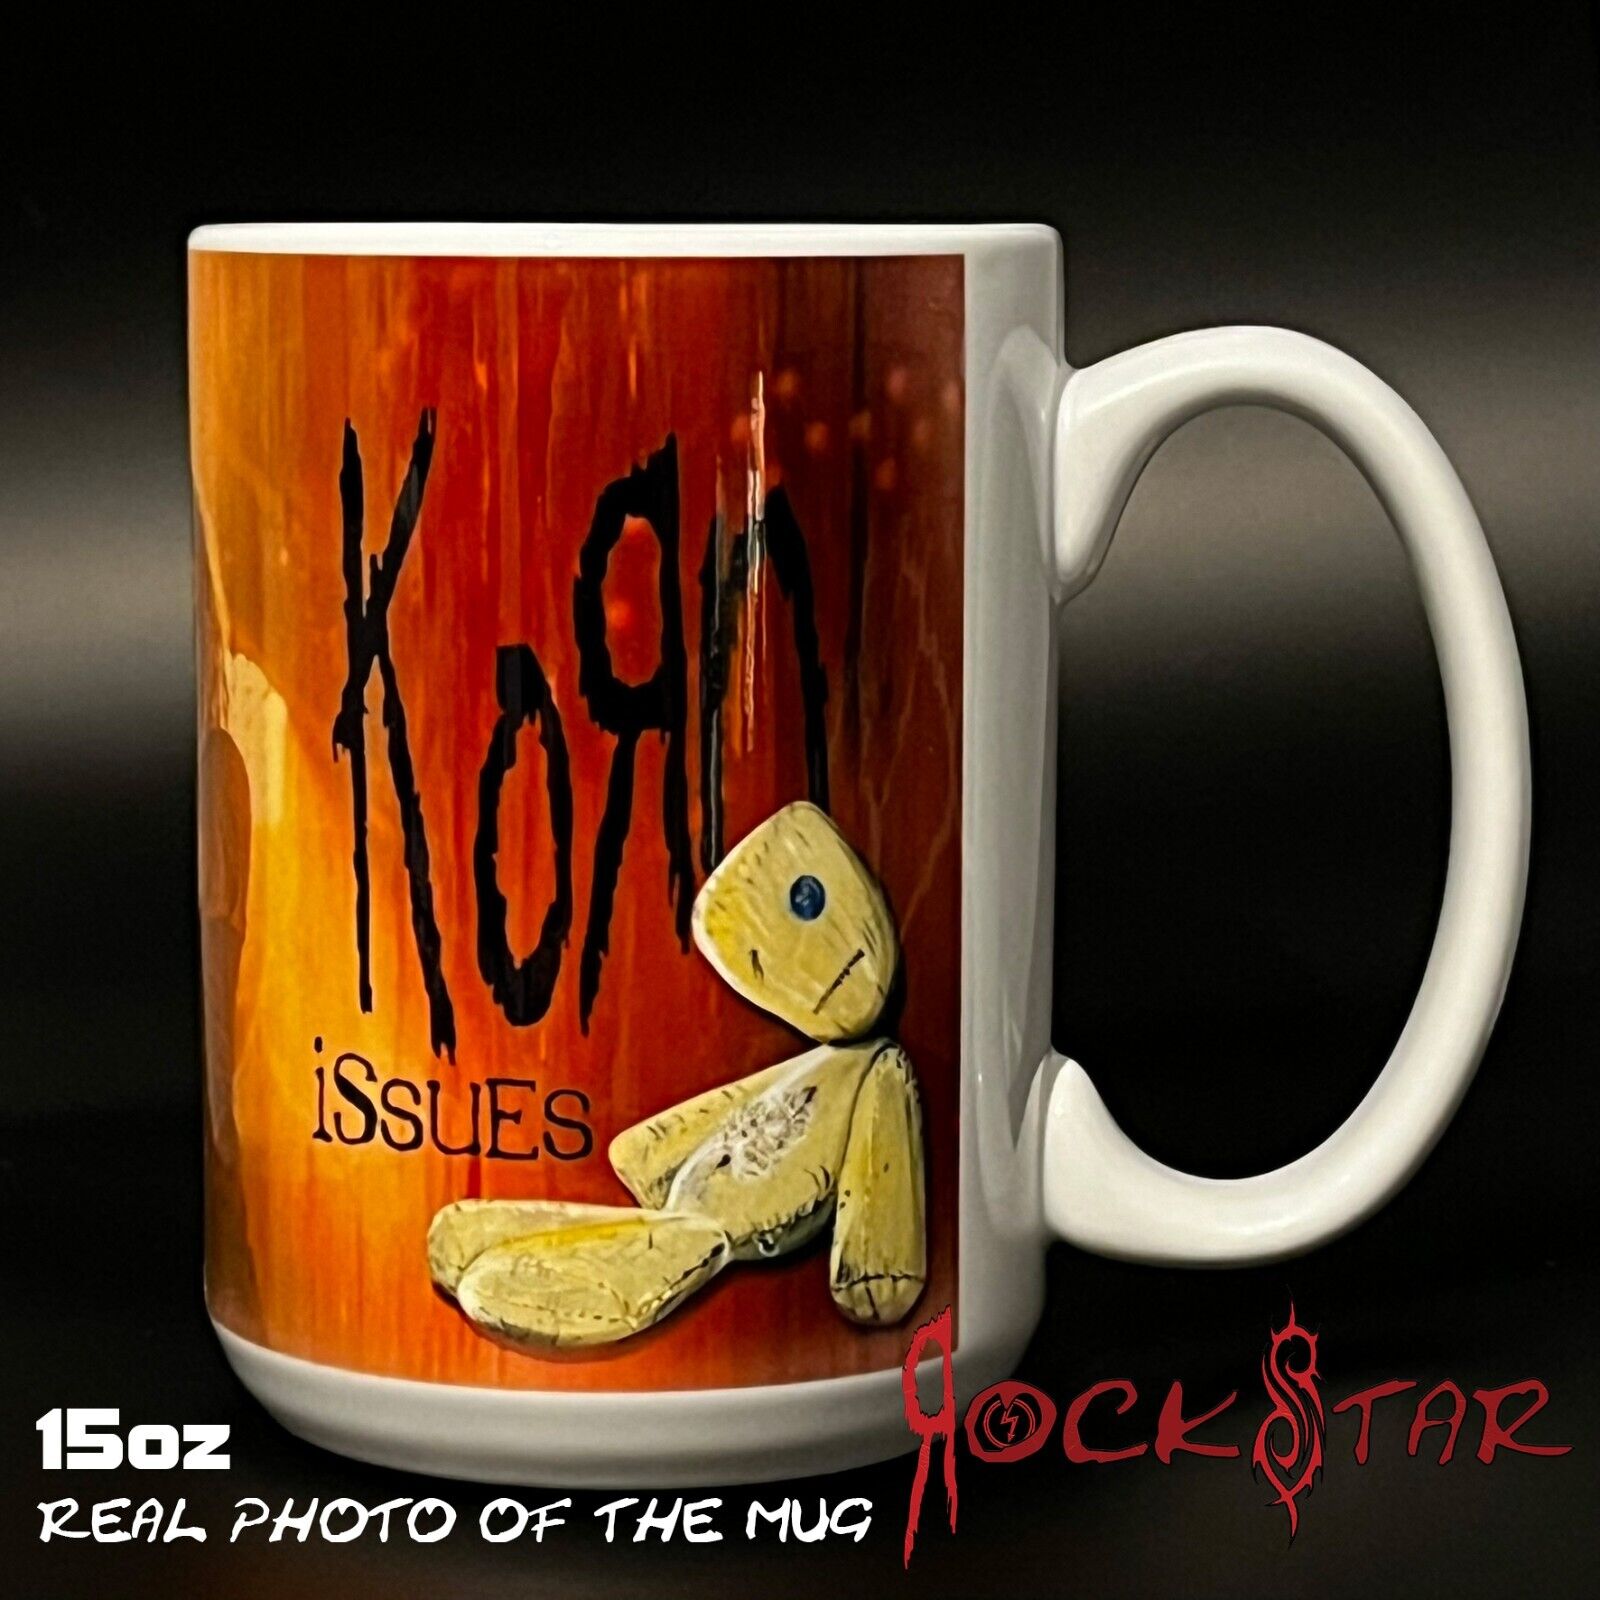 KORN Coffee mug JD ISSUES 15oz - KoRn Jonathan Davis Issues 15oz 